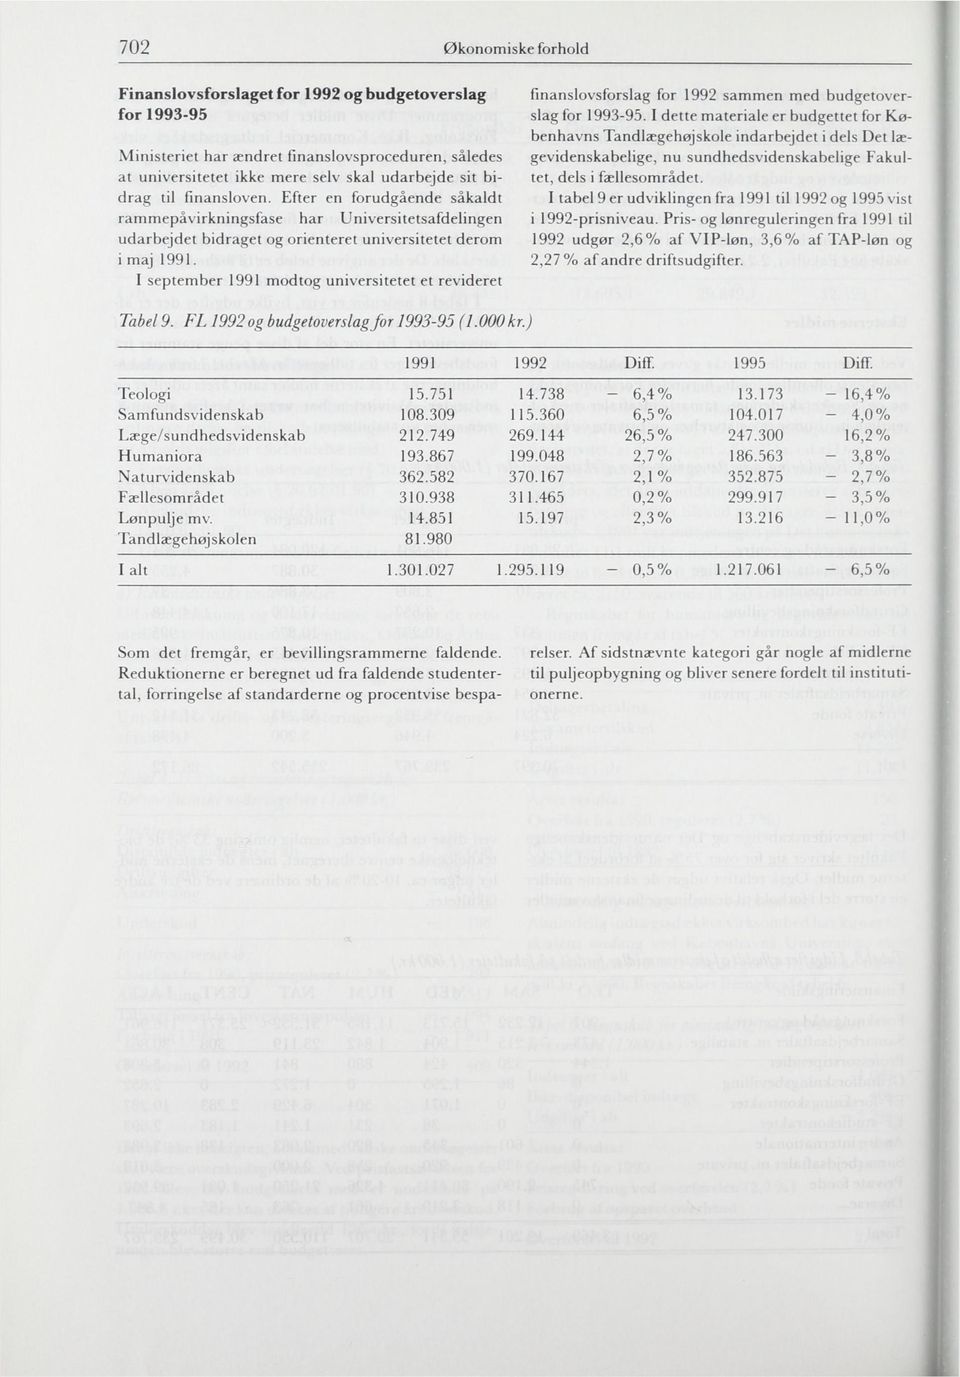 I september 1991 modtog universitetet et revideret finanslovsforslag for 1992 sammen med budgetoverslag for 1993-95.